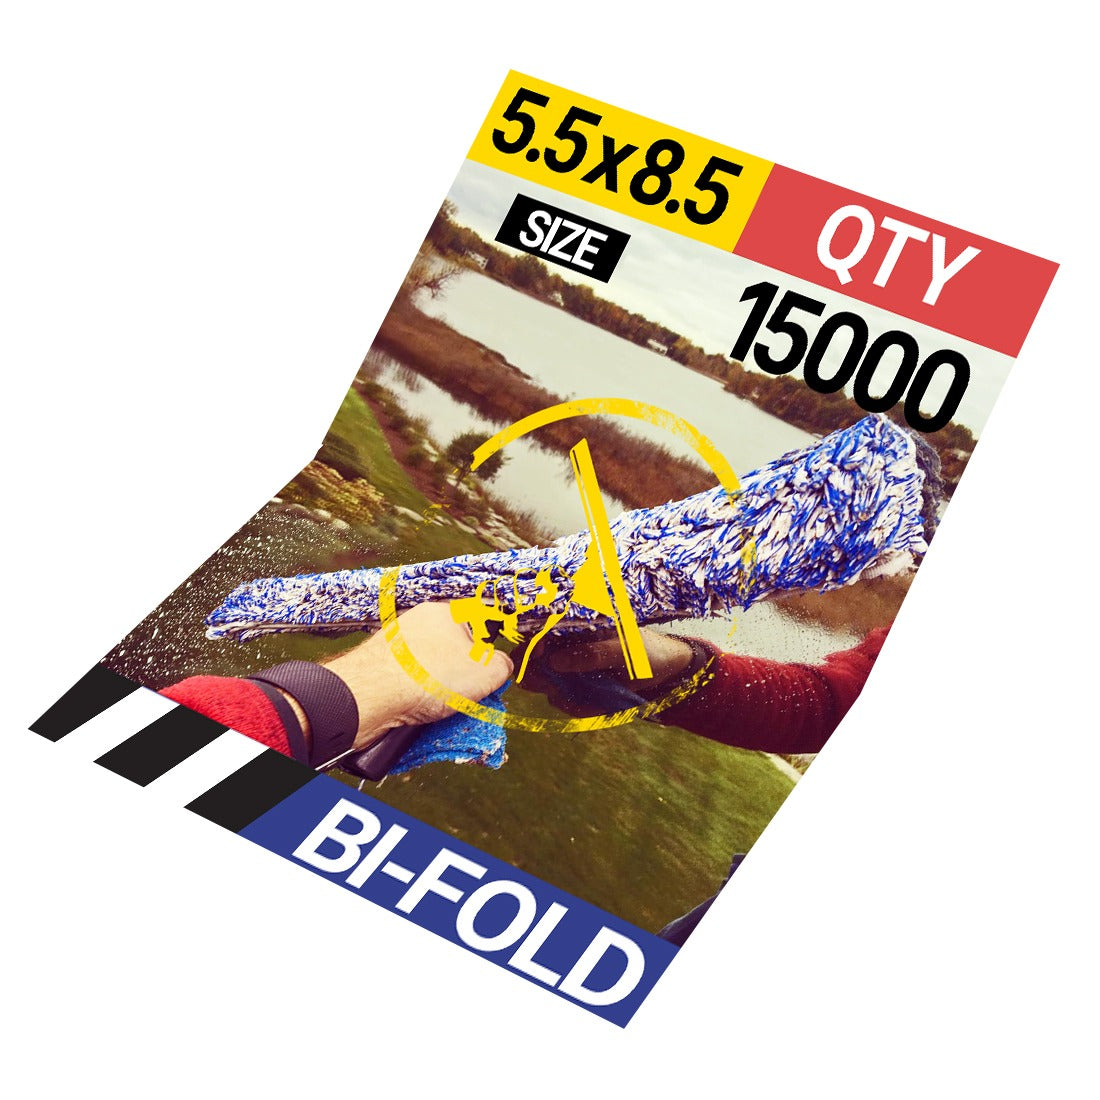 Brochure Bi-Fold 5.5 x 8.5 15000 Front View